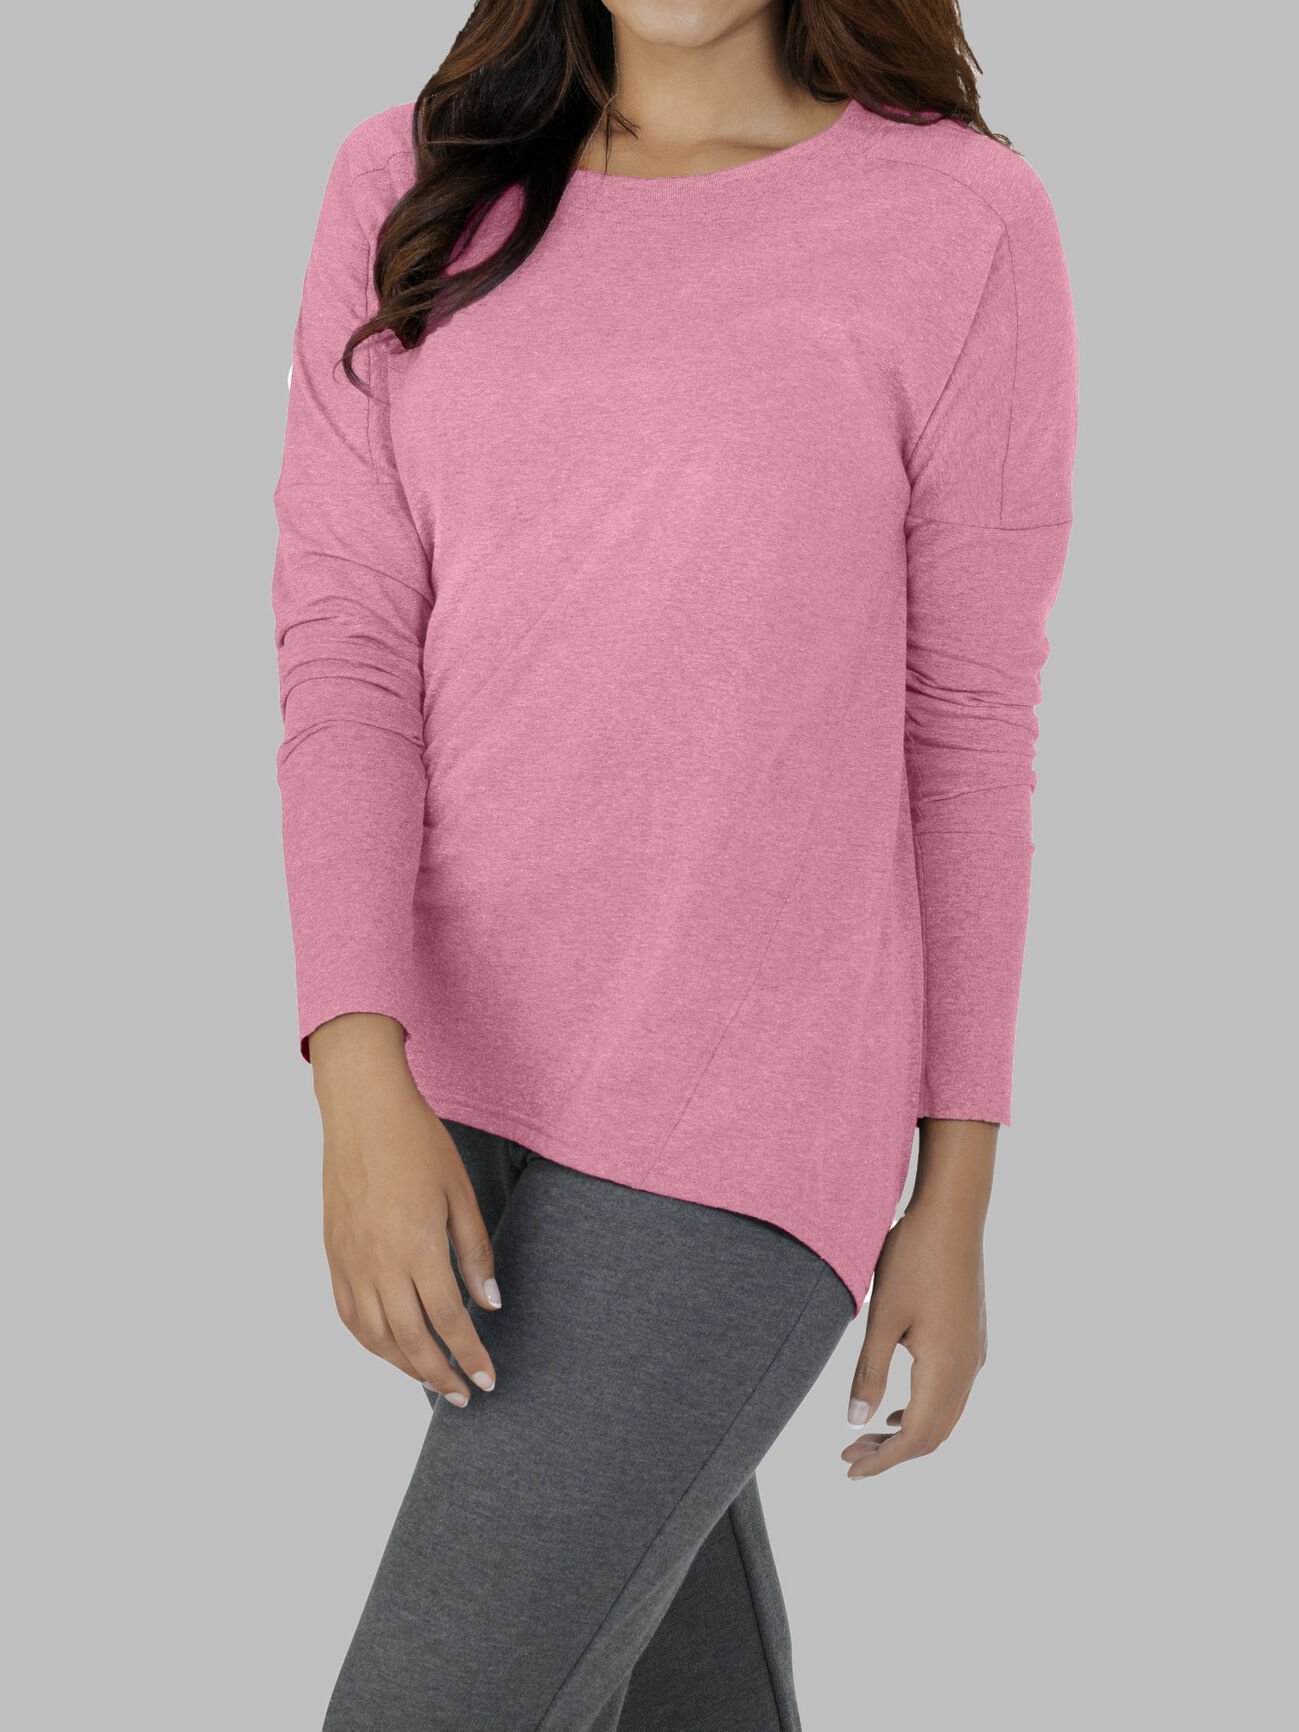 Women's Essentials Long Sleeve Scoop Neck T-Shirt Rose Heather